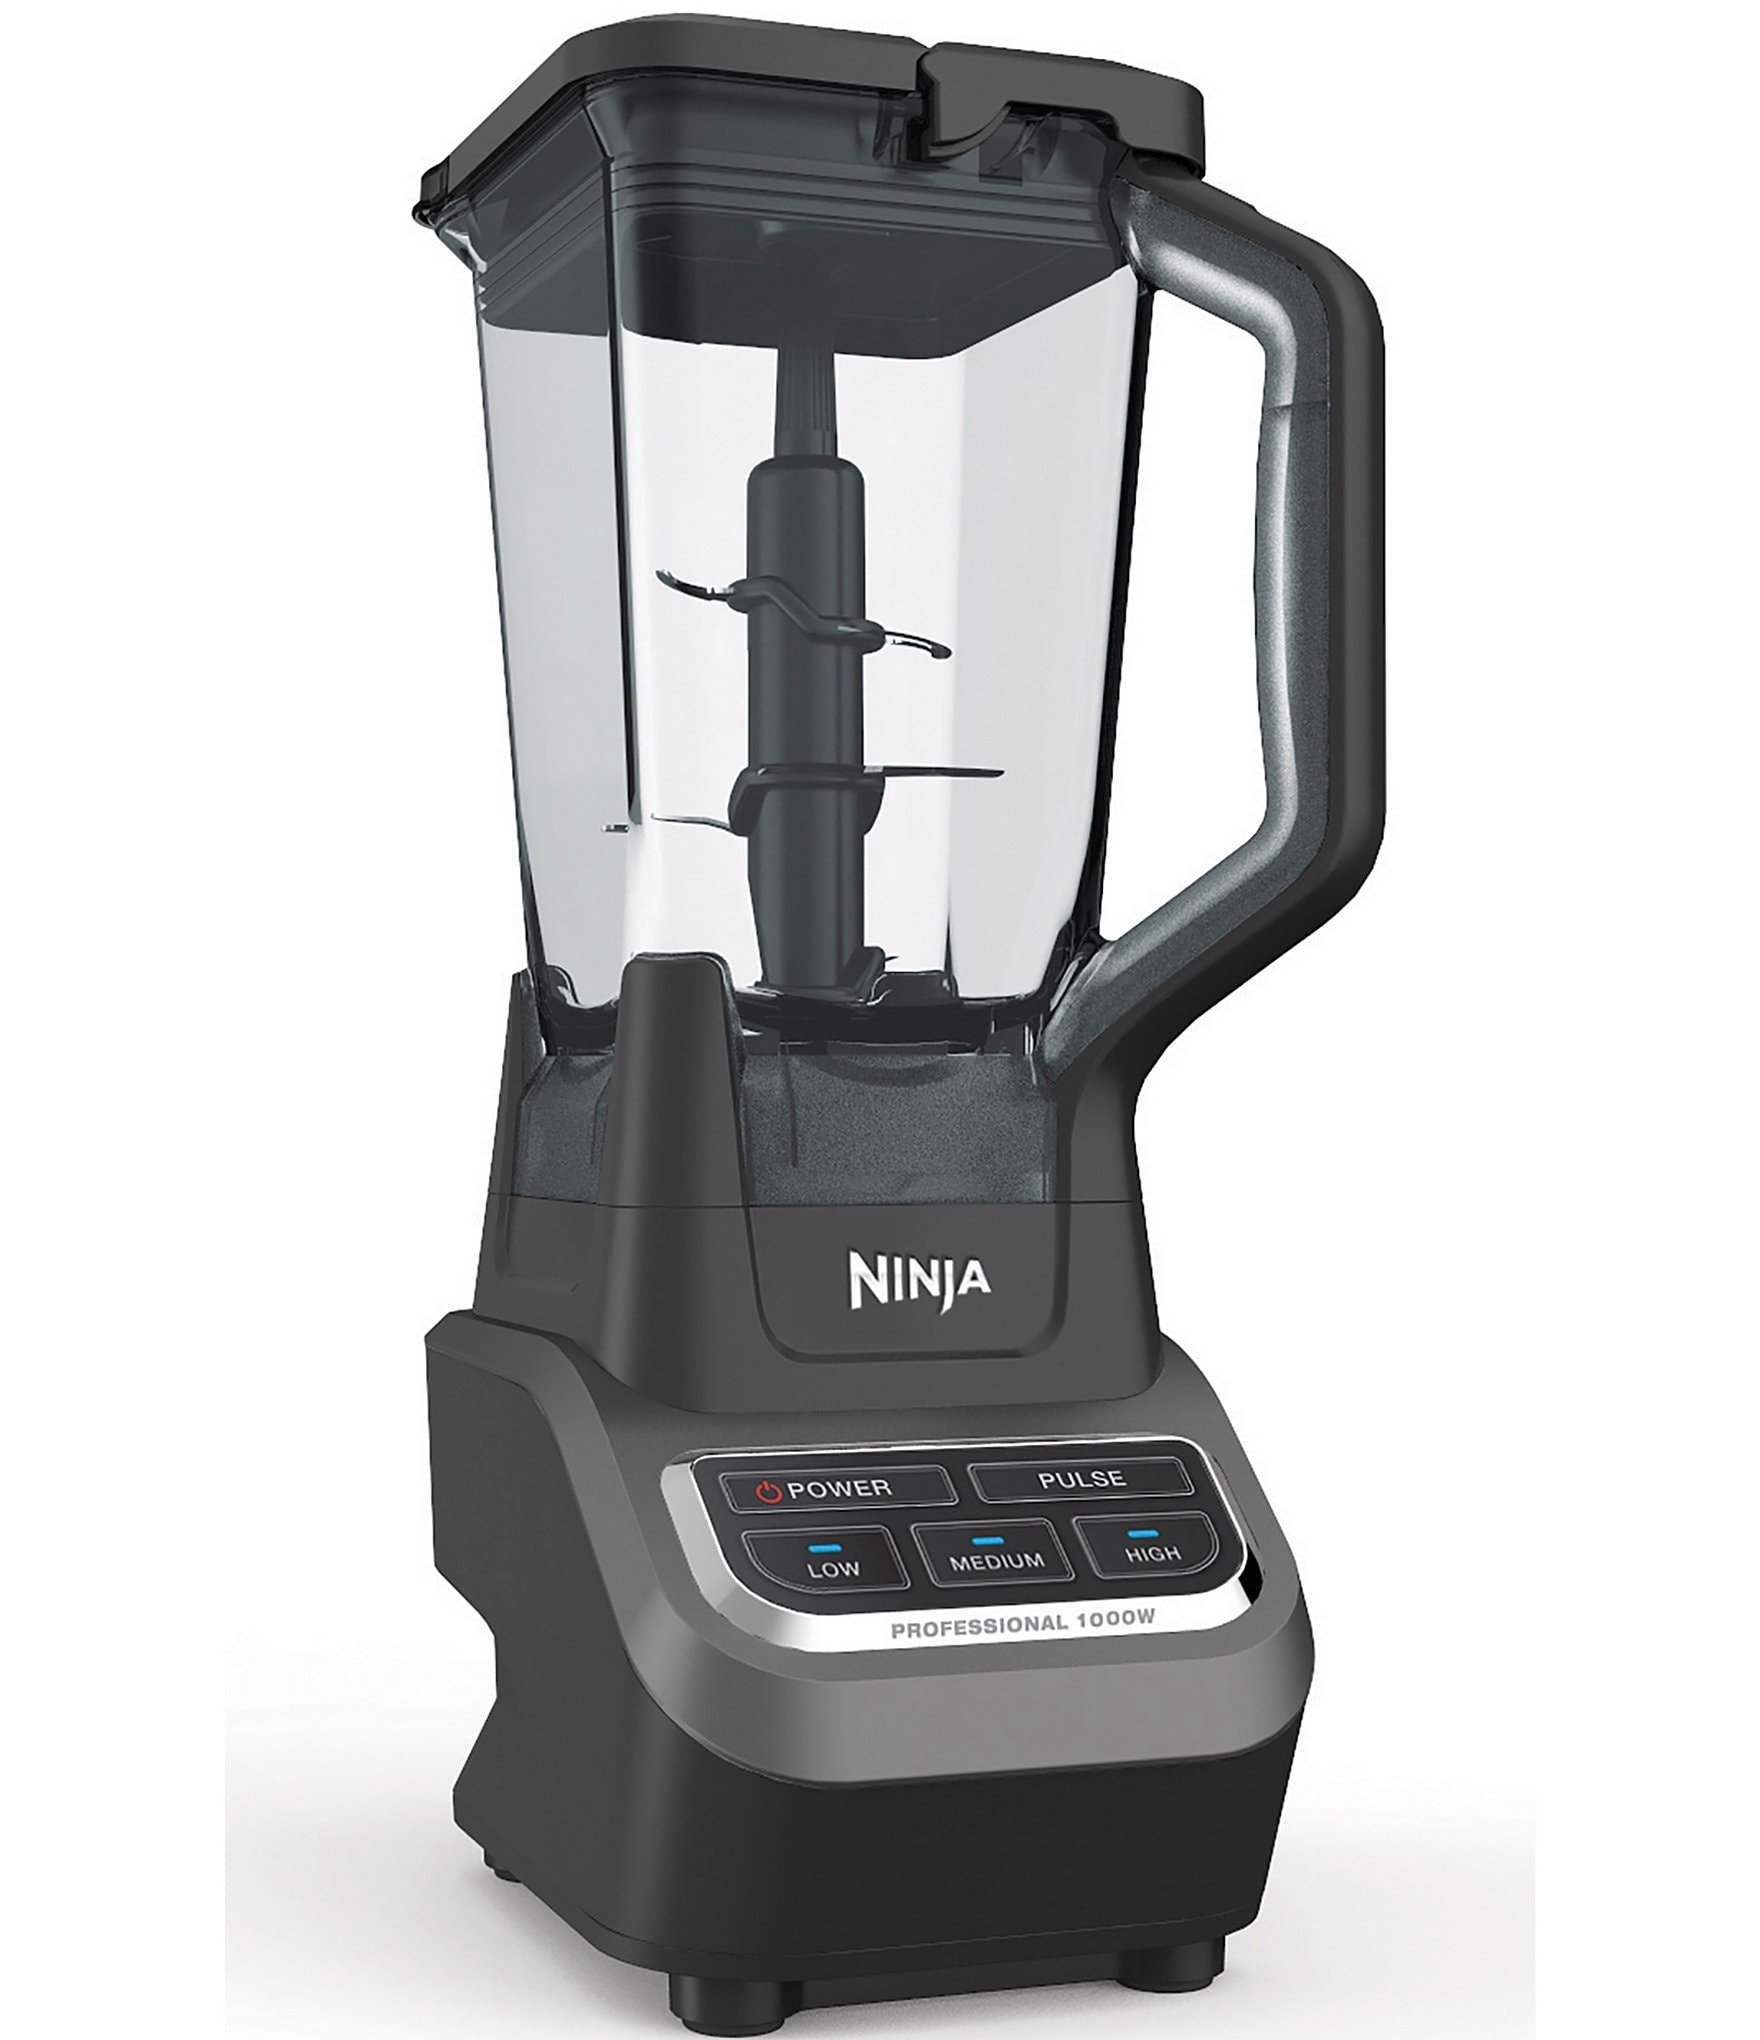 Ninja Professional Blender 1000 Watt  The Wholesale & Liquidation Experts  Blog